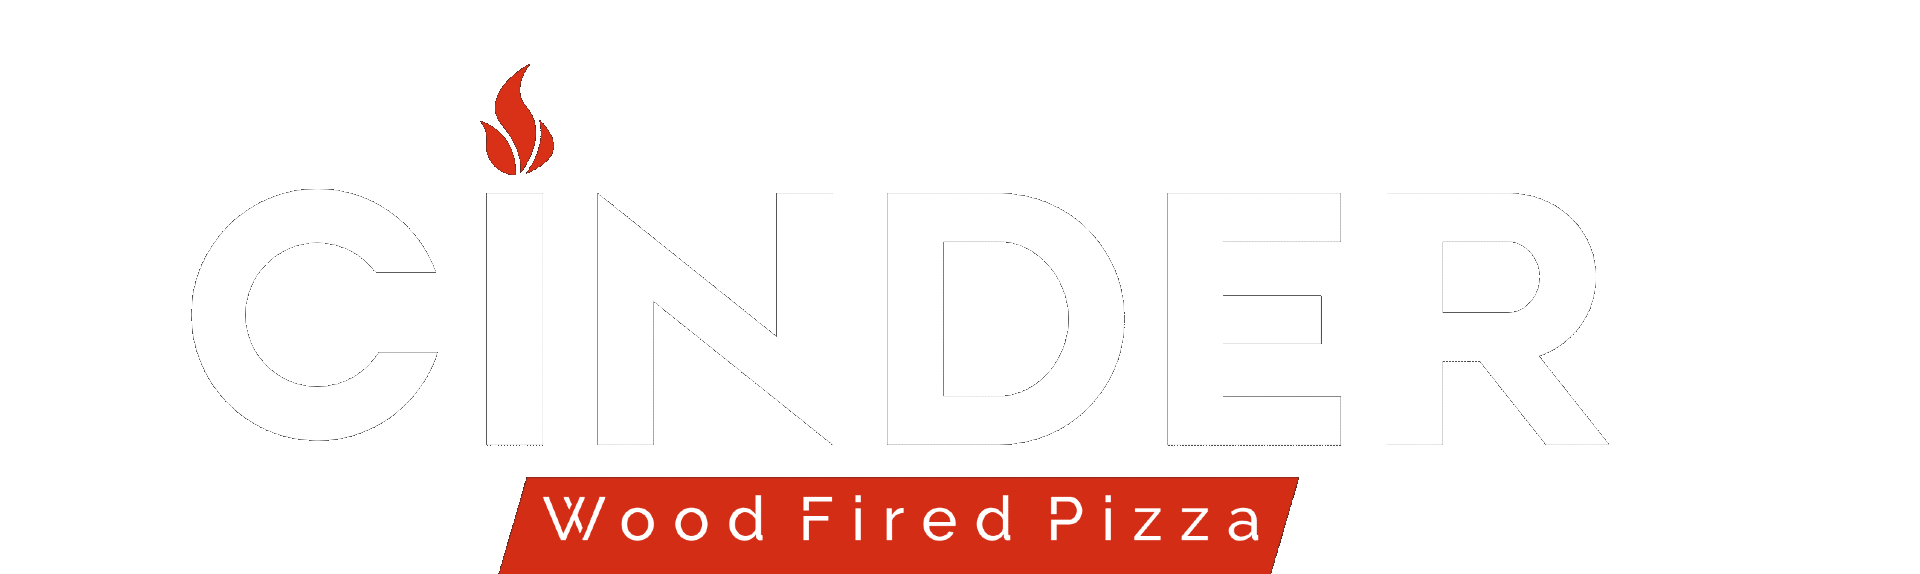 Pizza Truck Logo